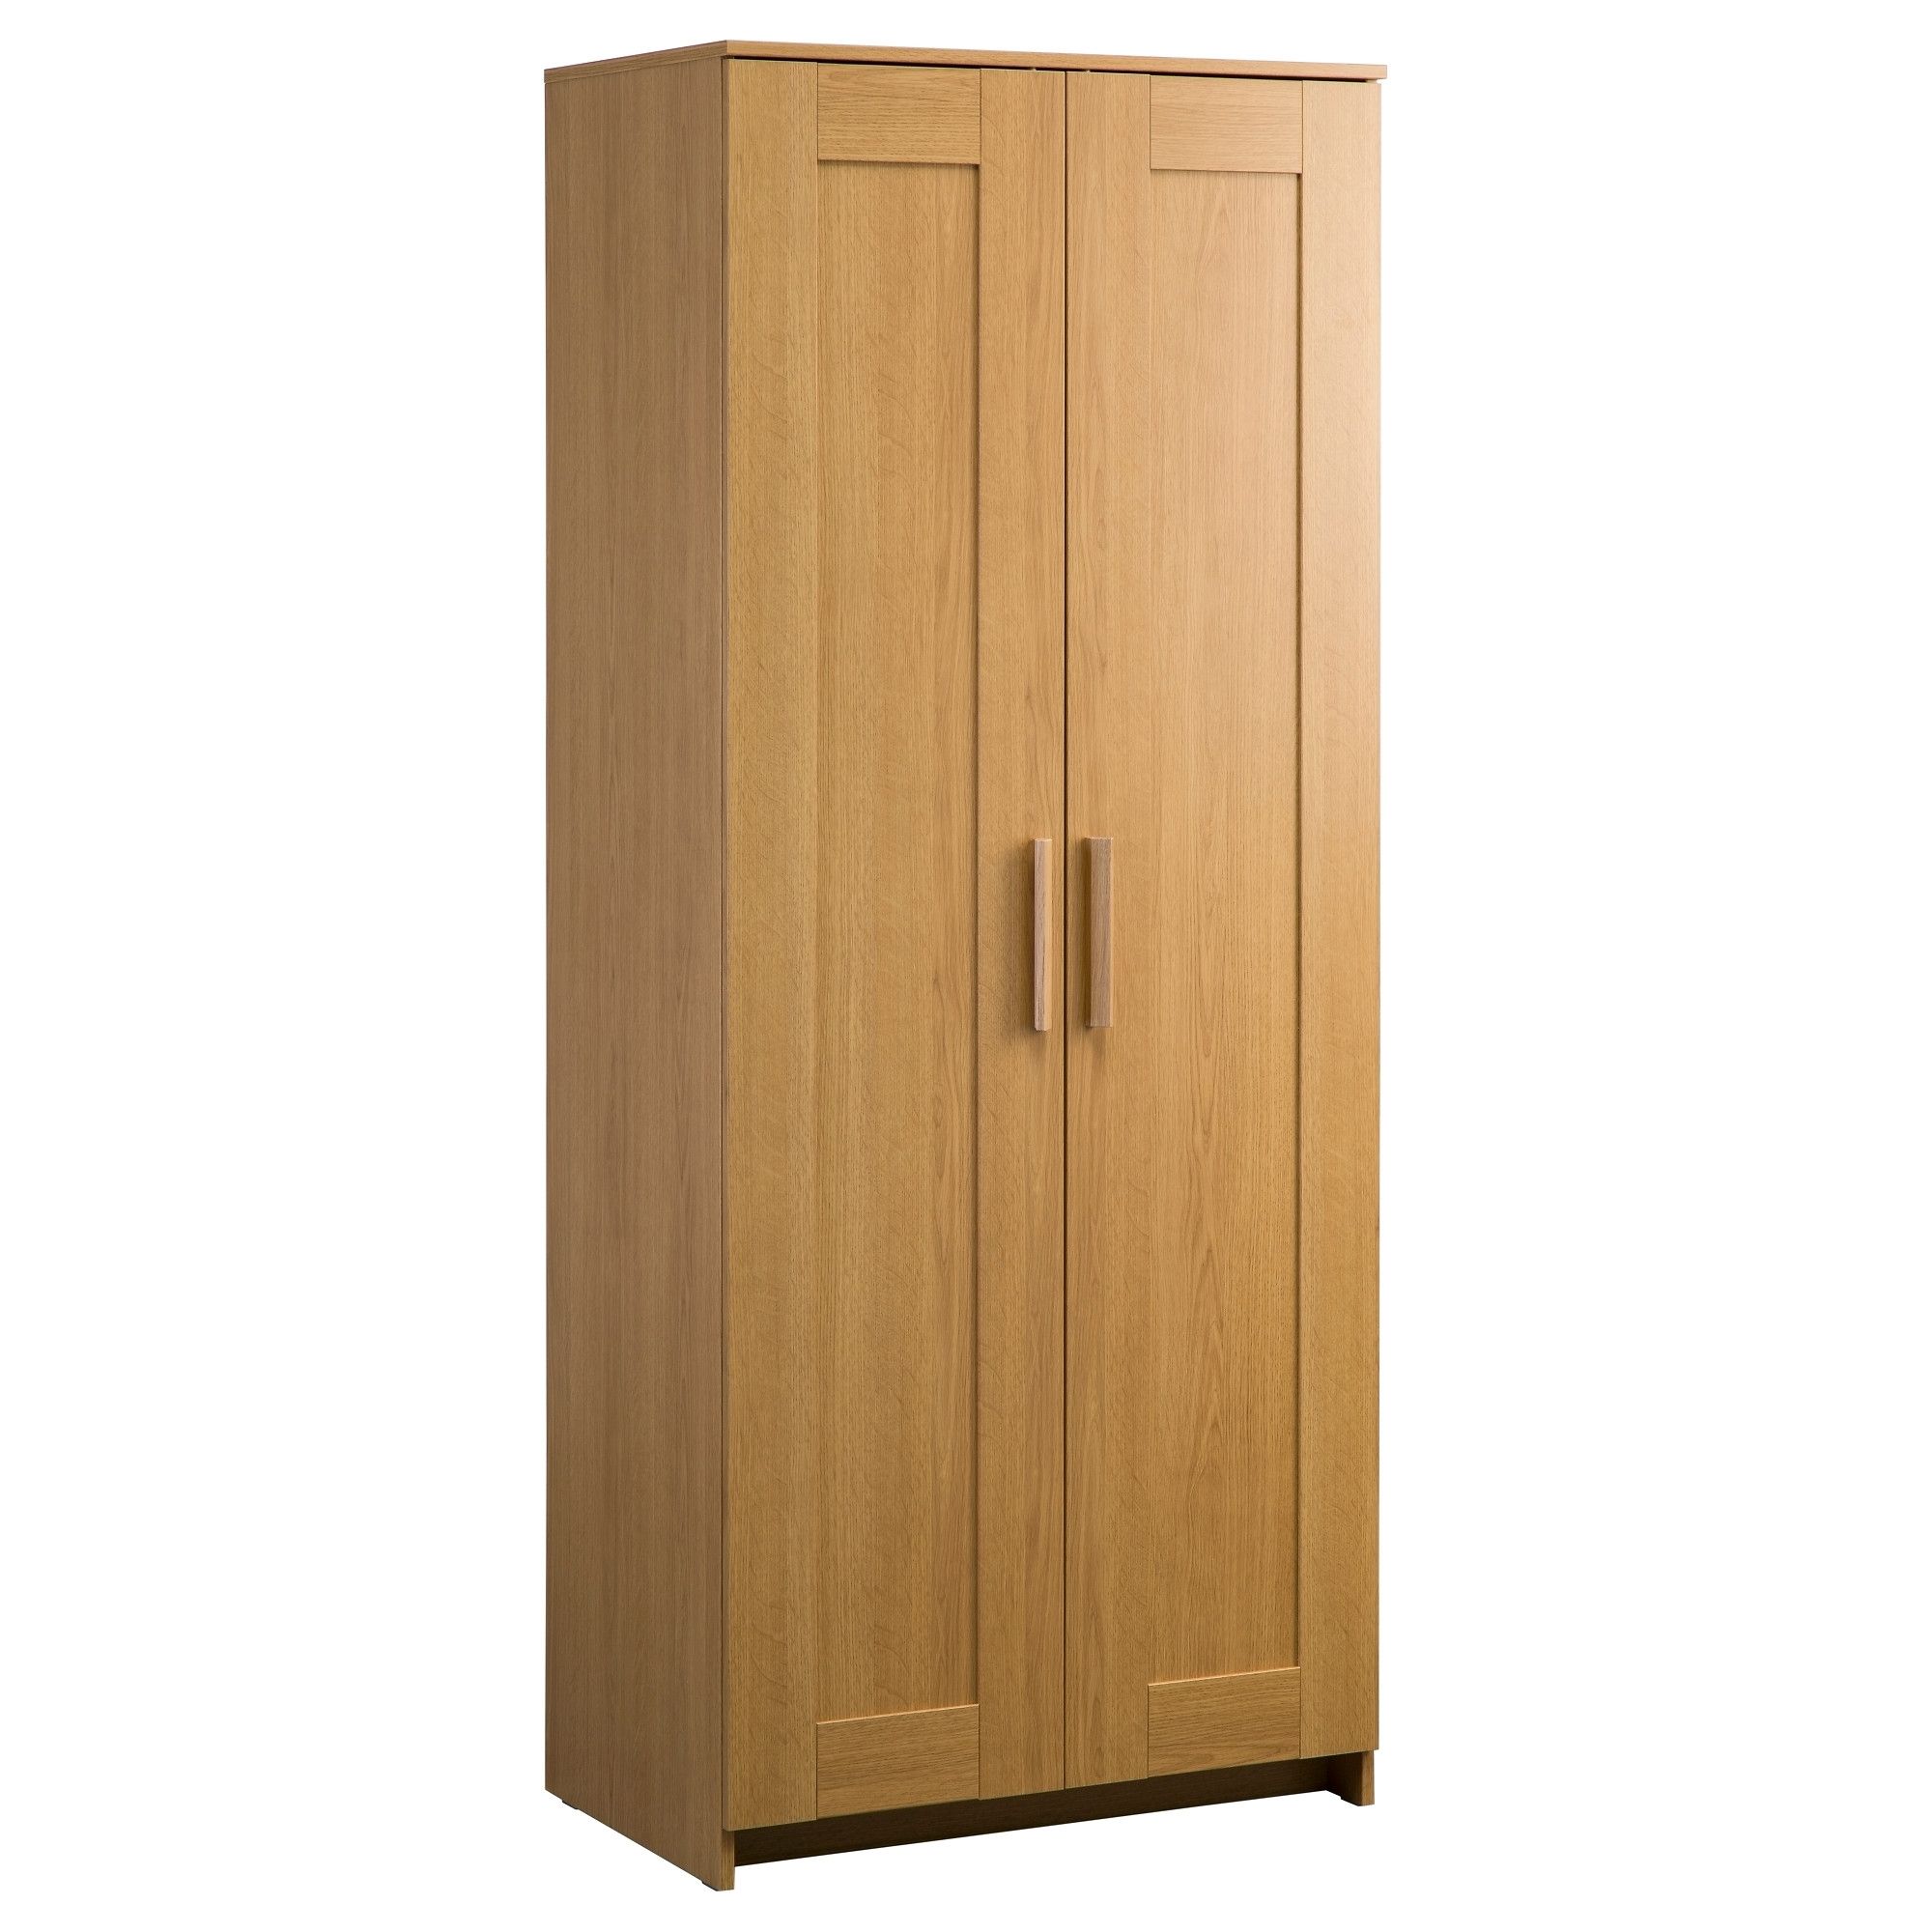 Fashionable Oak Wardrobes Within Brimnes Wardrobe With 3 Doors Oak Effect 117x190 Cm – Ikea (View 15 of 15)